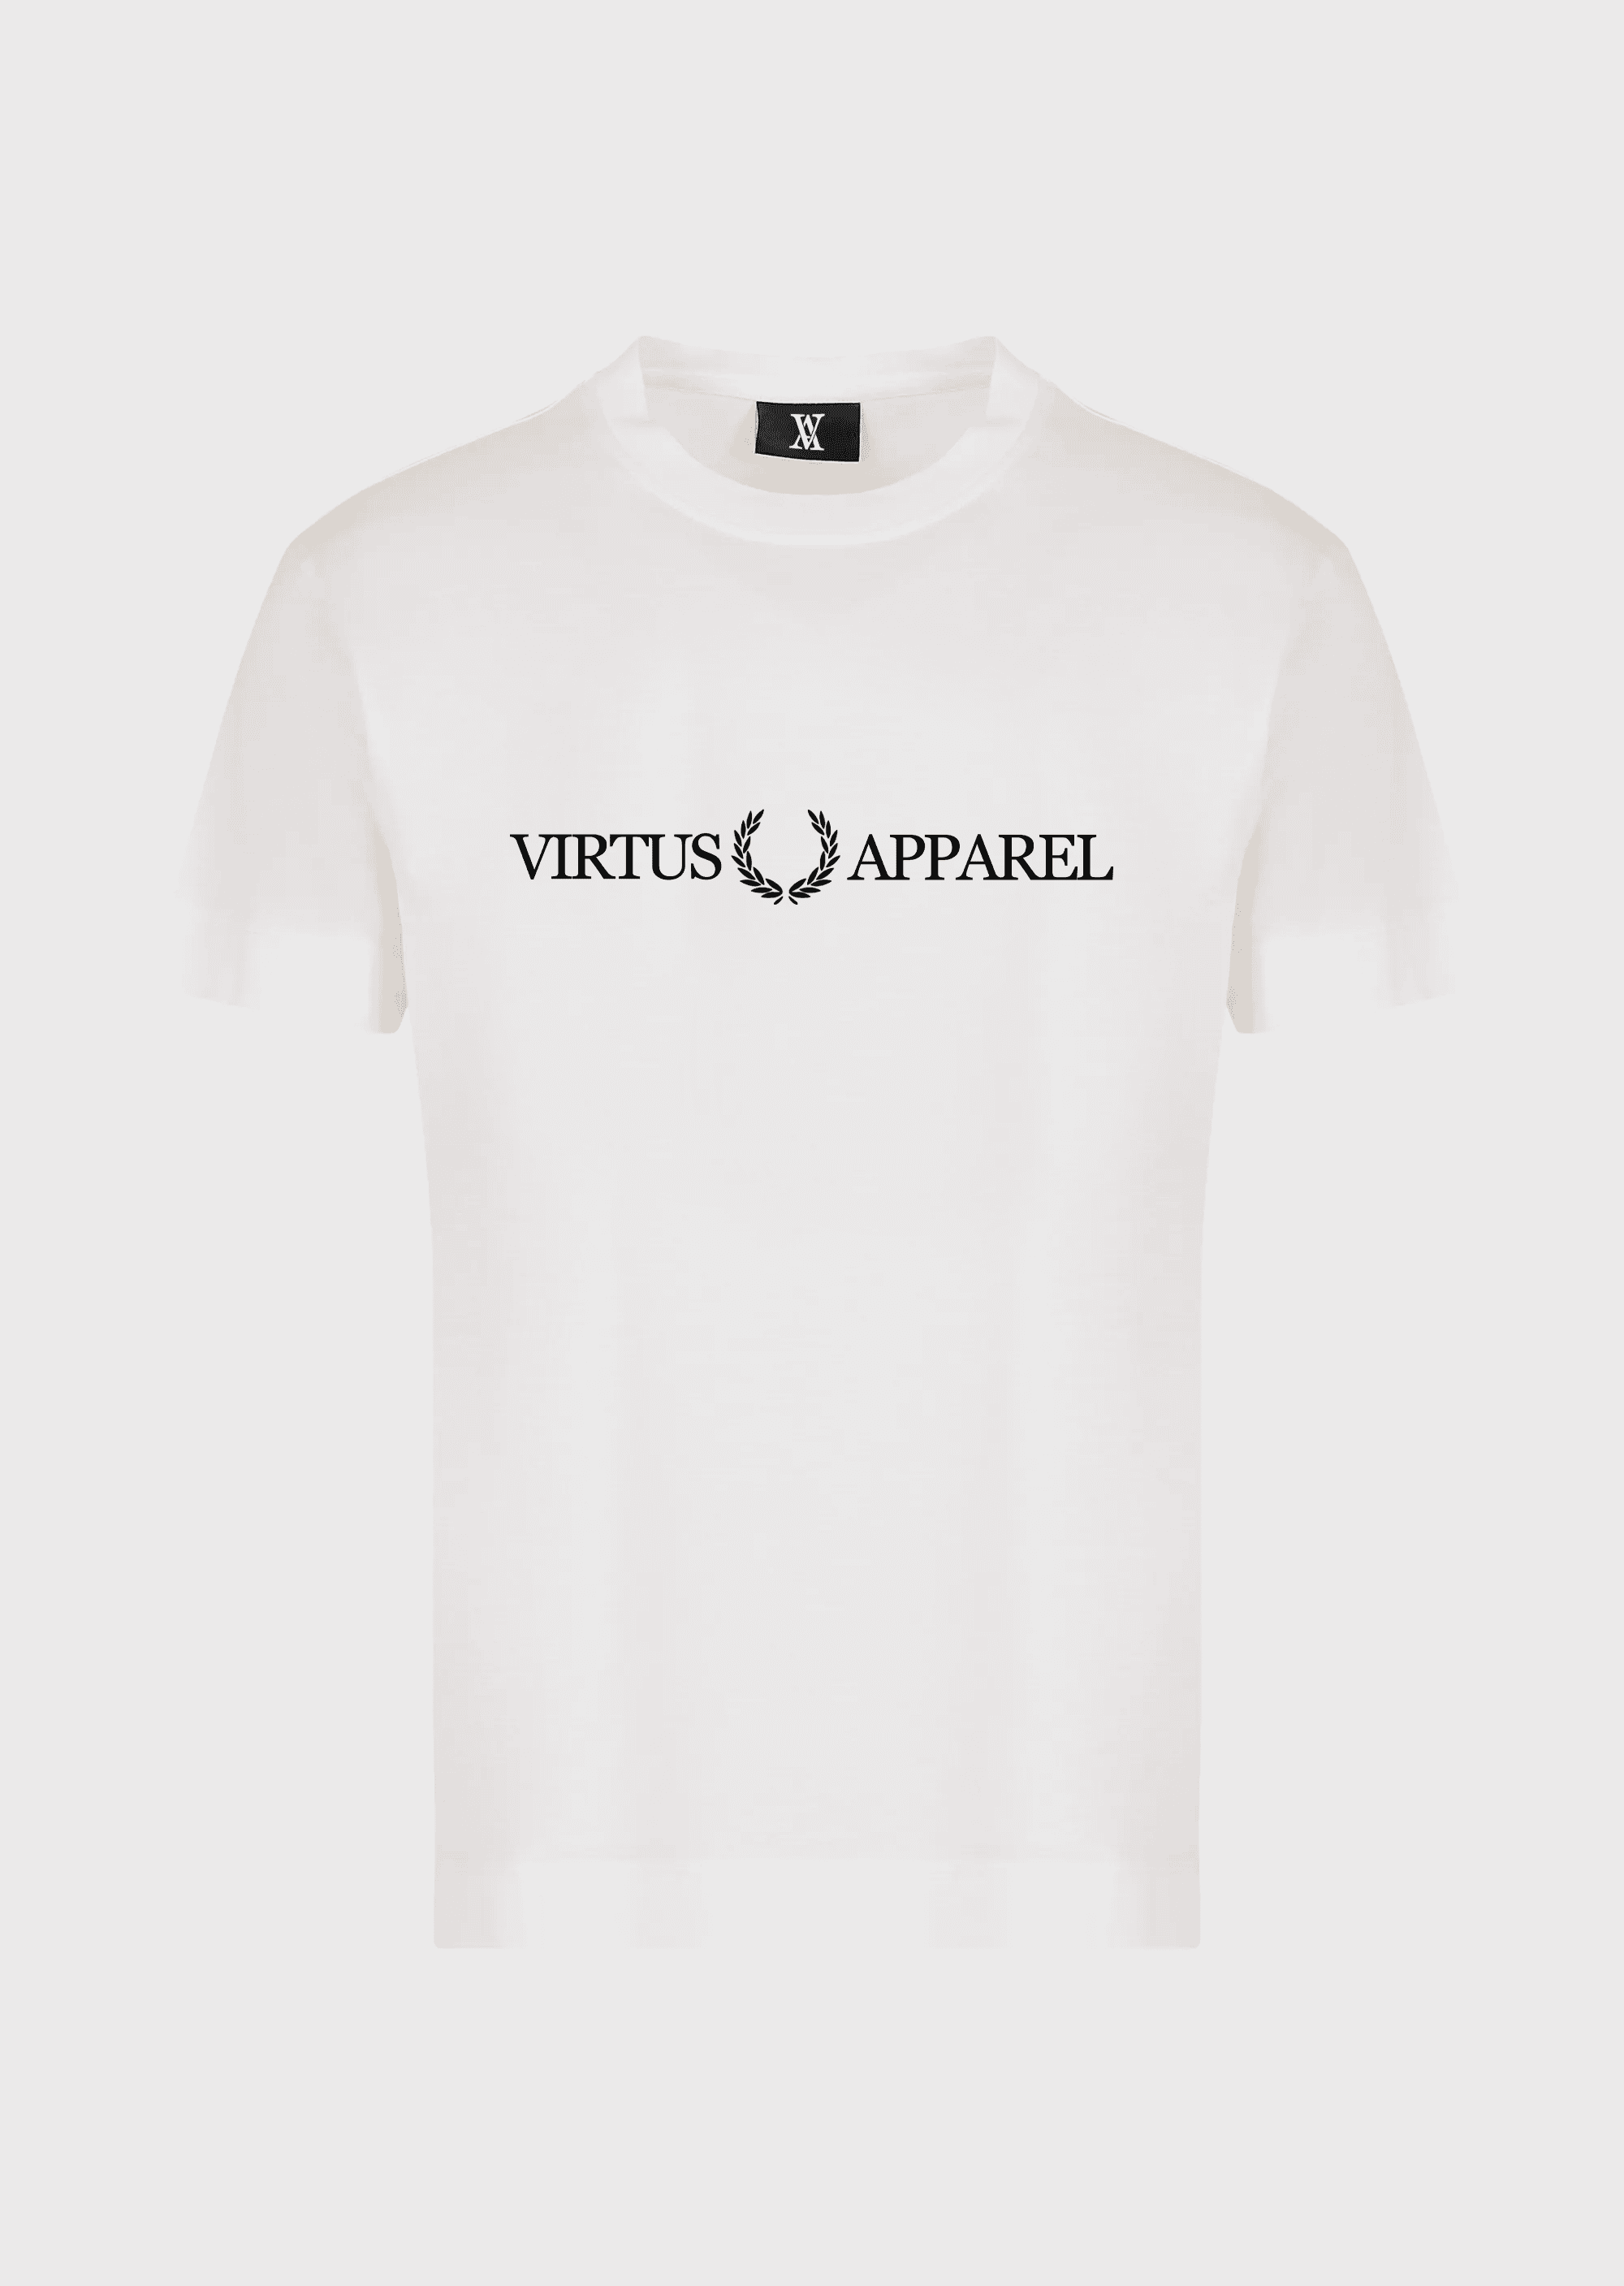 Virtus Apparel Store T-Shirt Apparel – Virtus